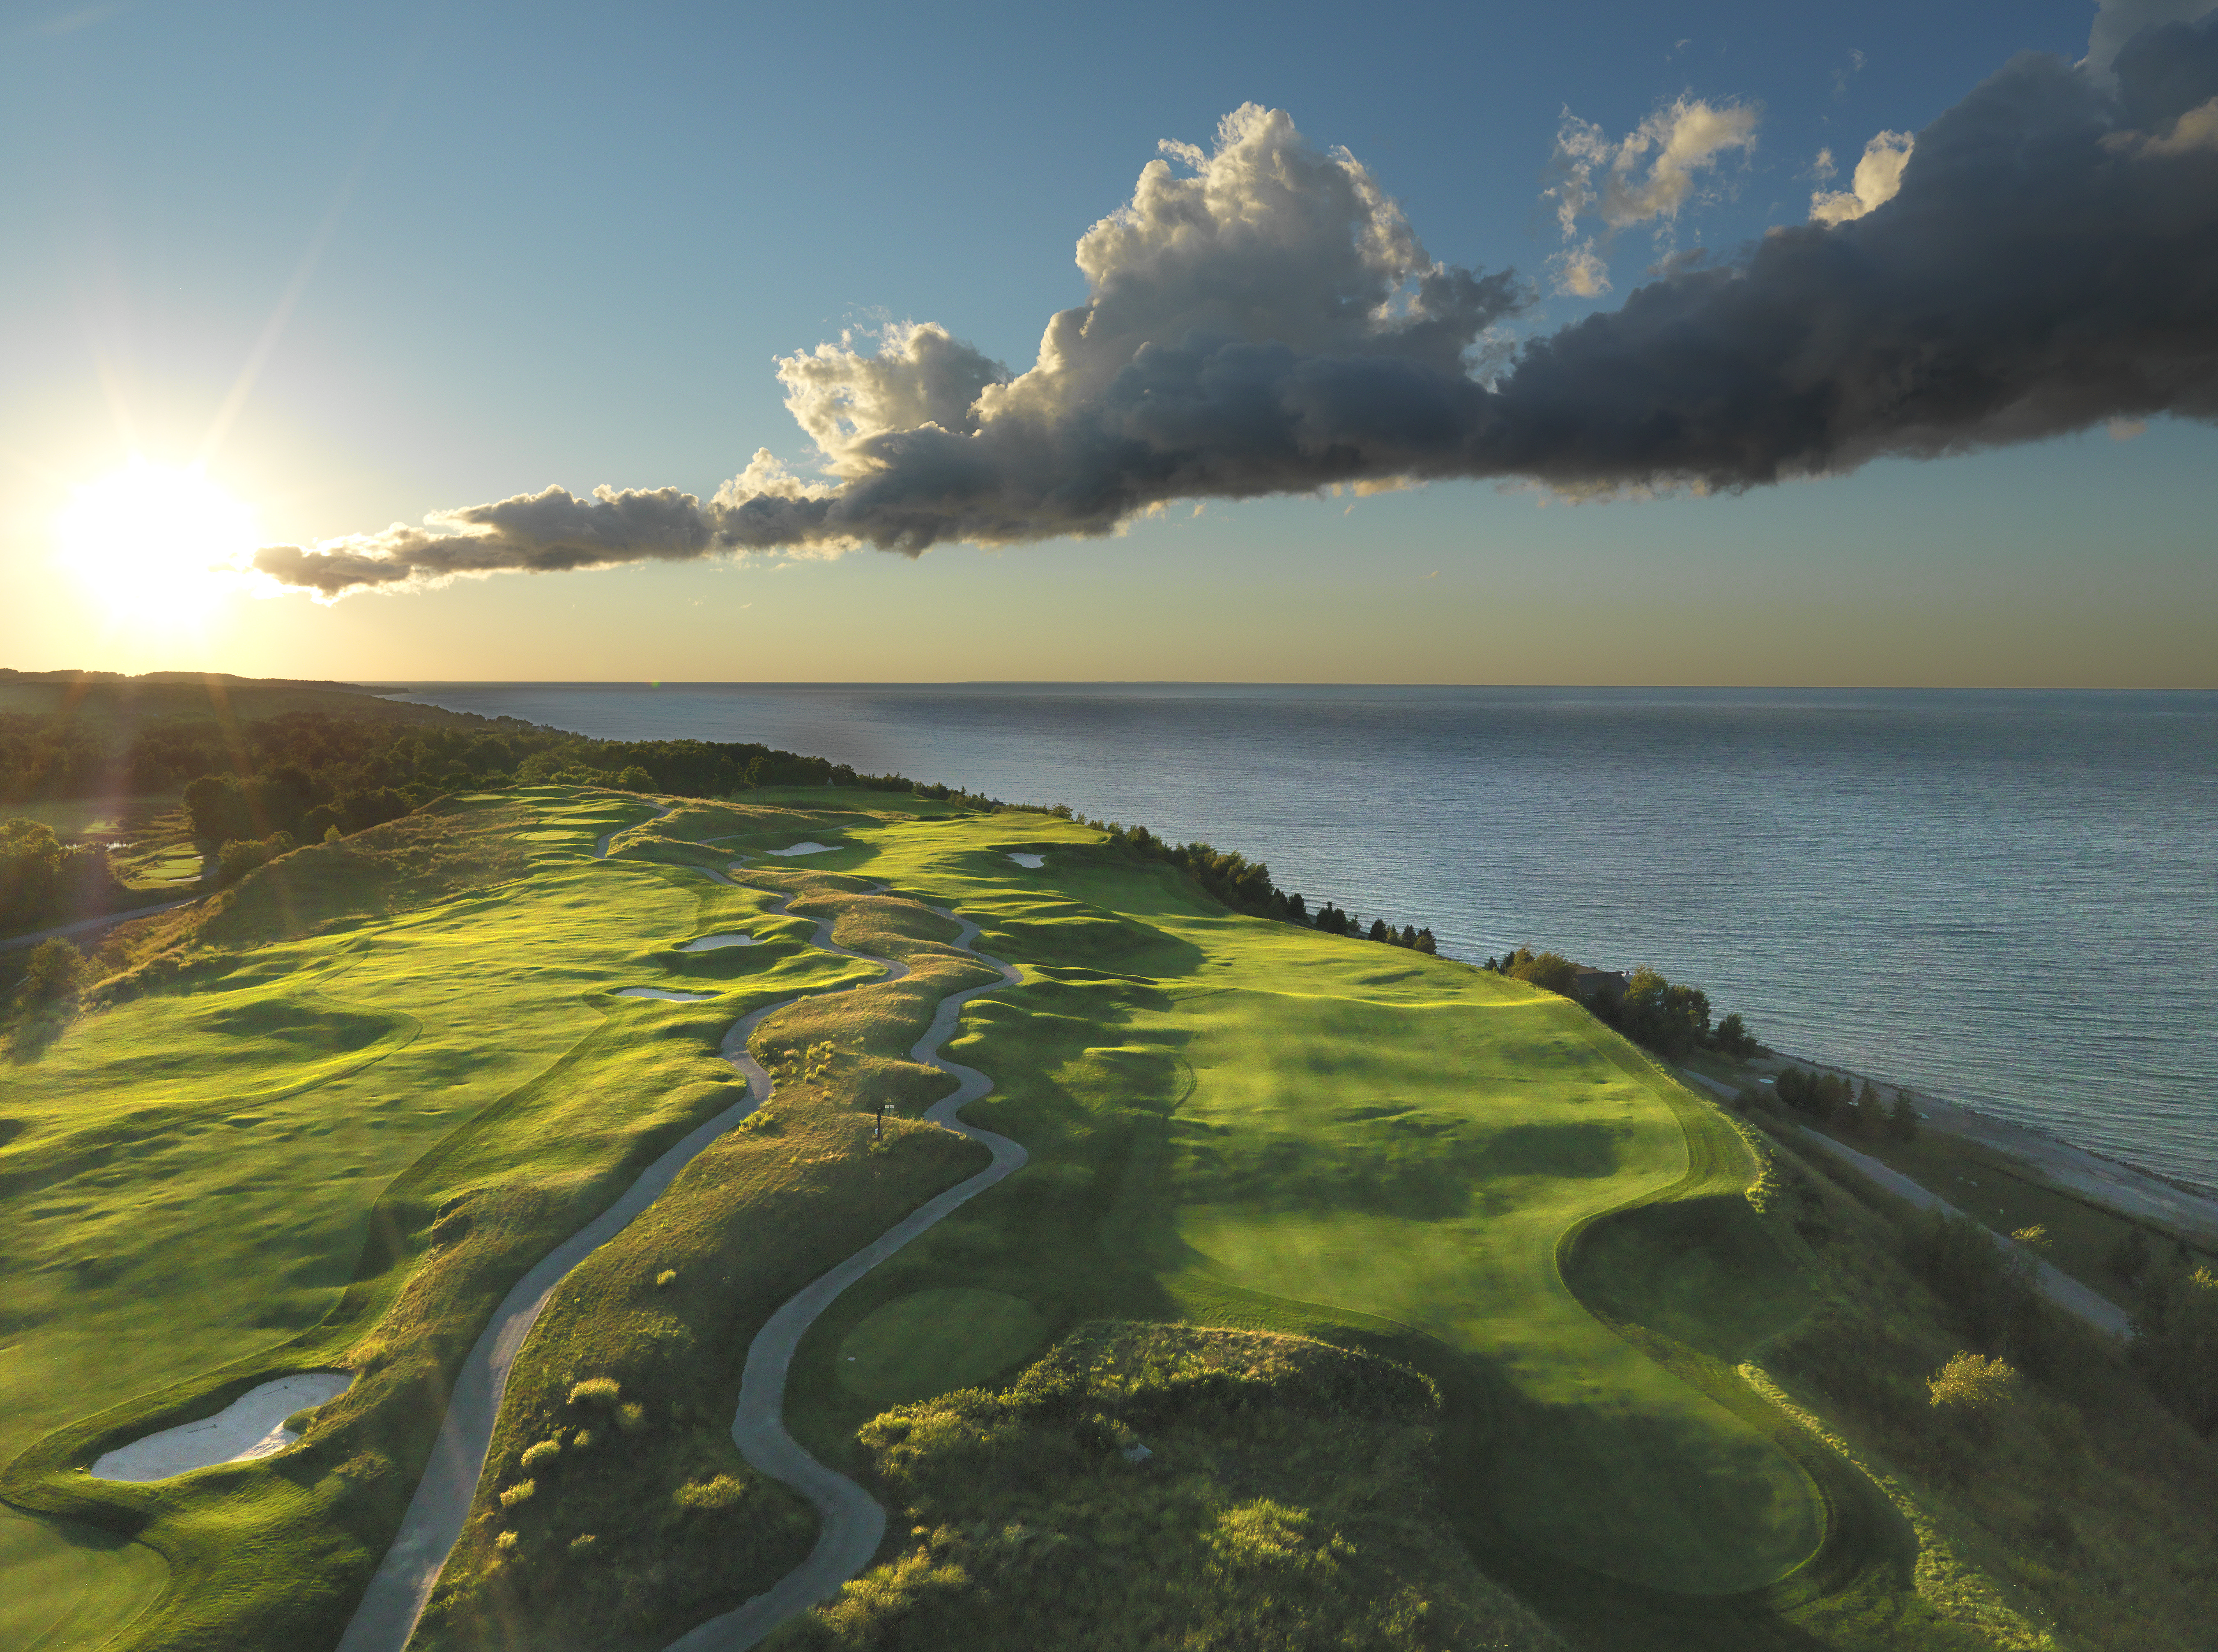 The 10 best Topgolf locations in great golf buddies trip destinations